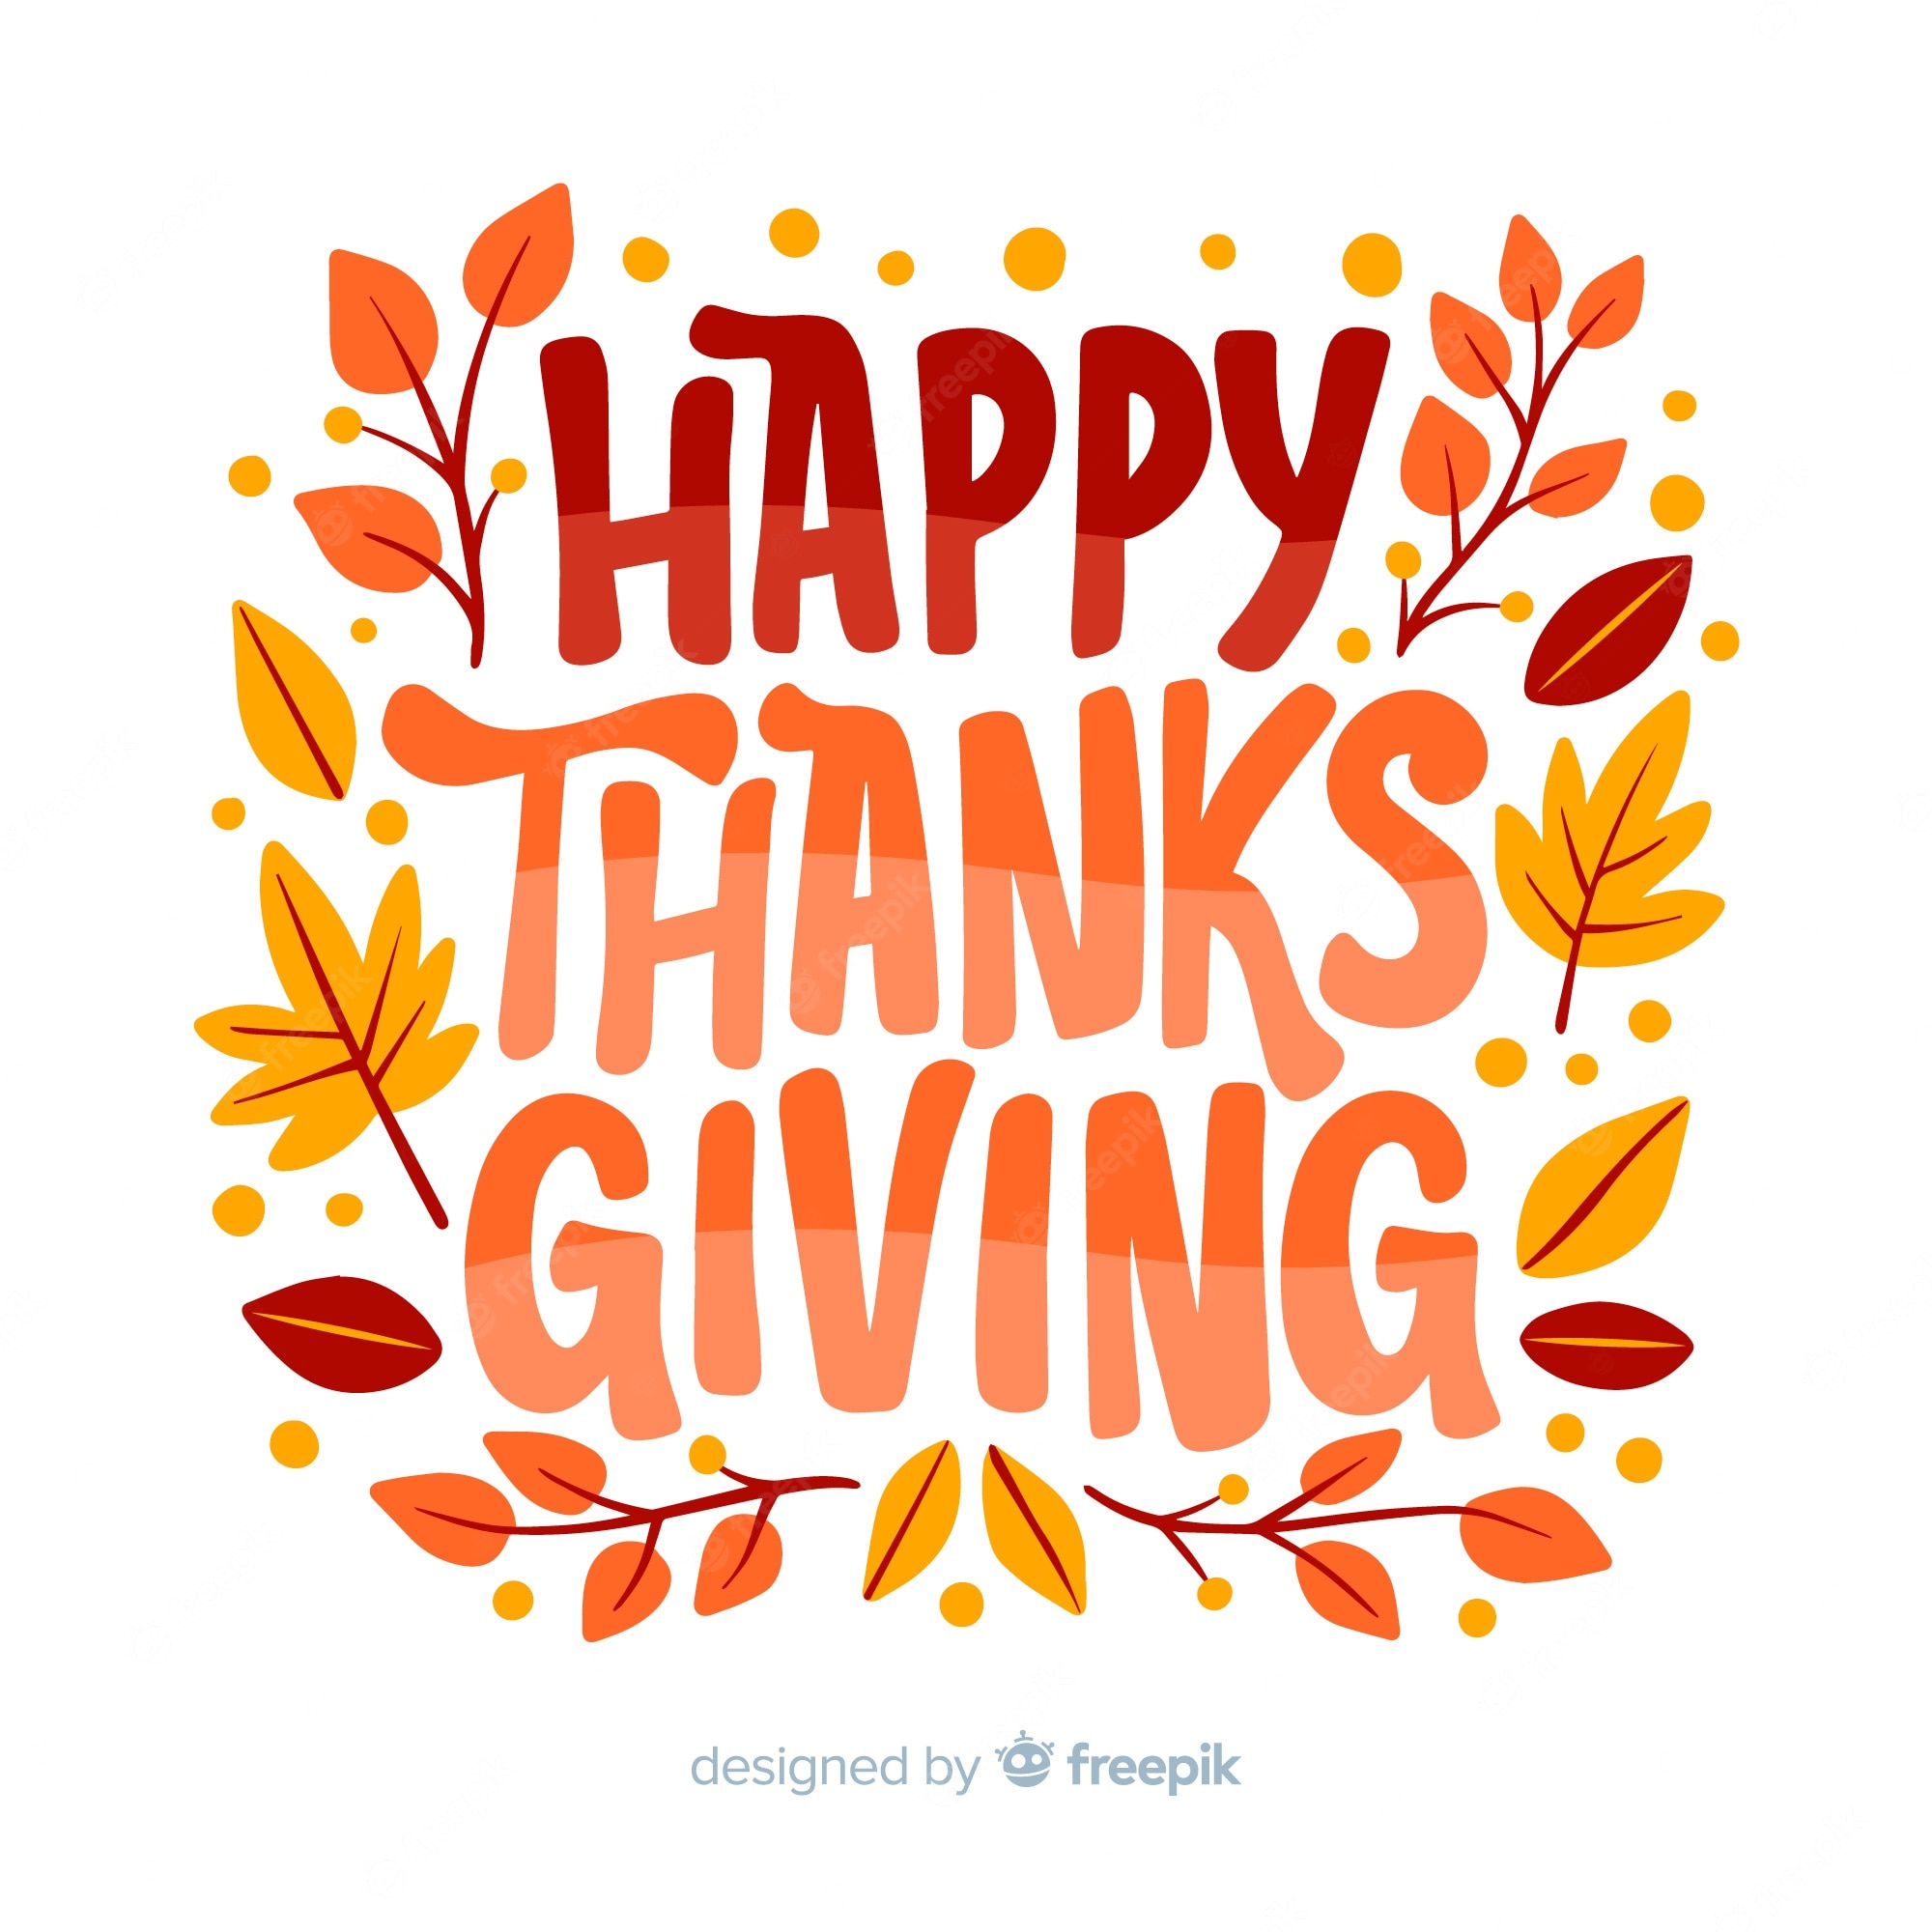 Happy thanksgiving Image. Free Vectors, & PSD